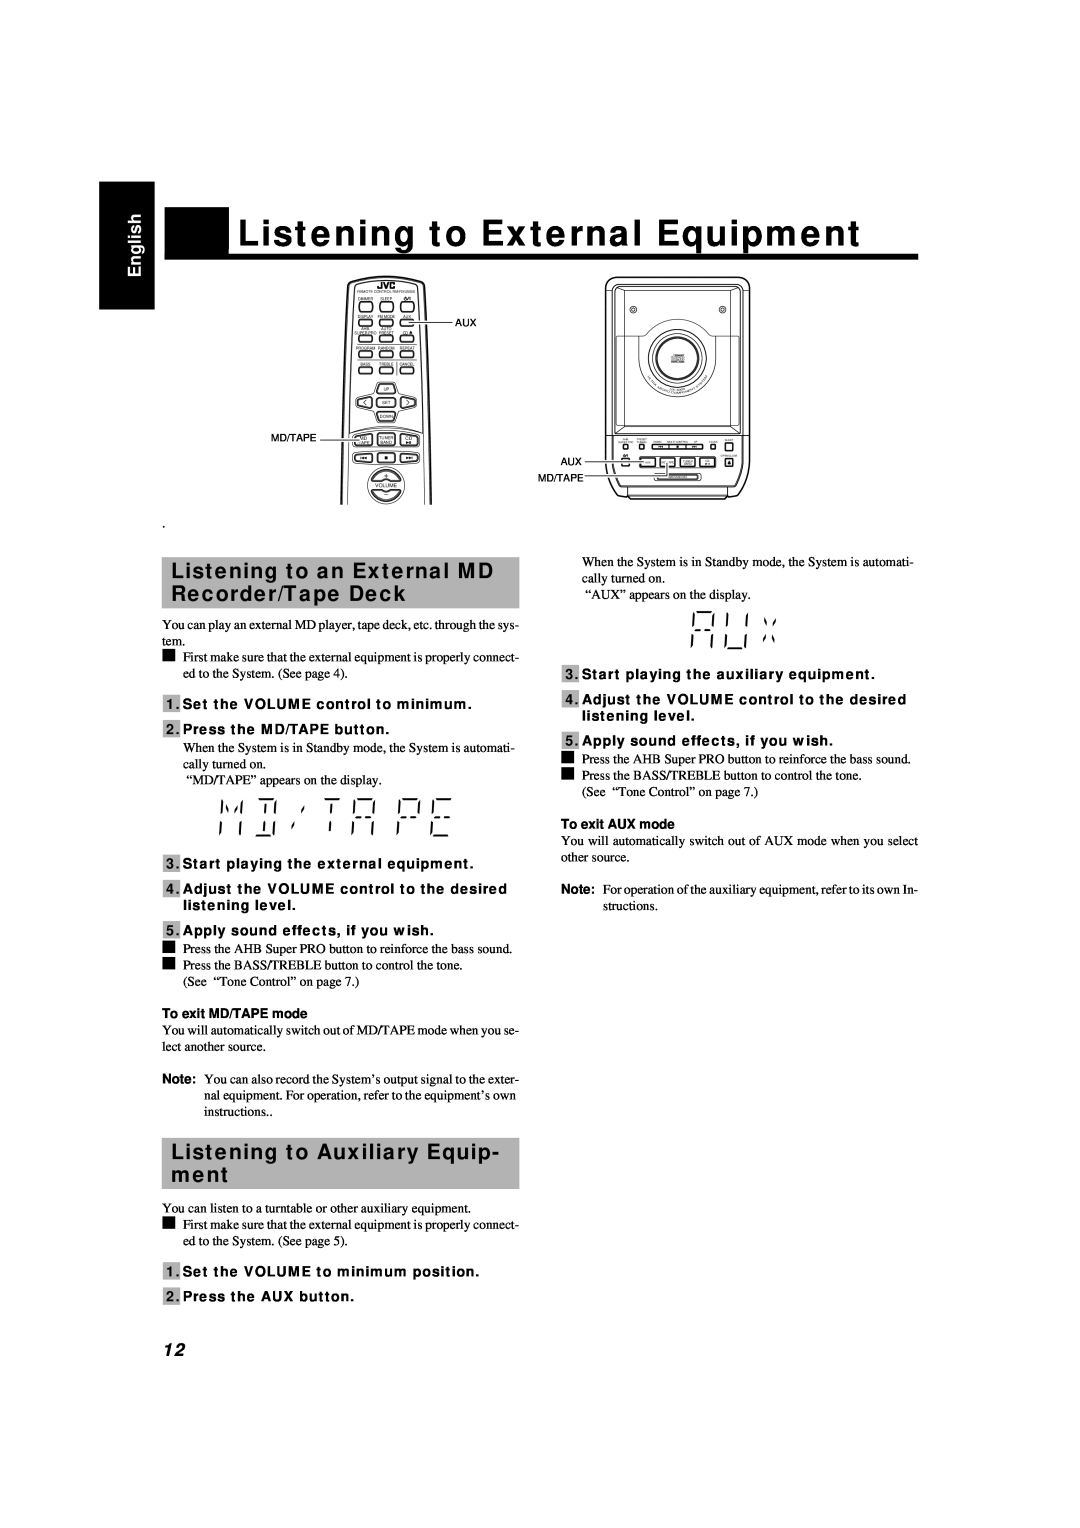 JVC UX-5000 manual Listening to External Equipment, Listening to an External MD Recorder/Tape Deck, English 